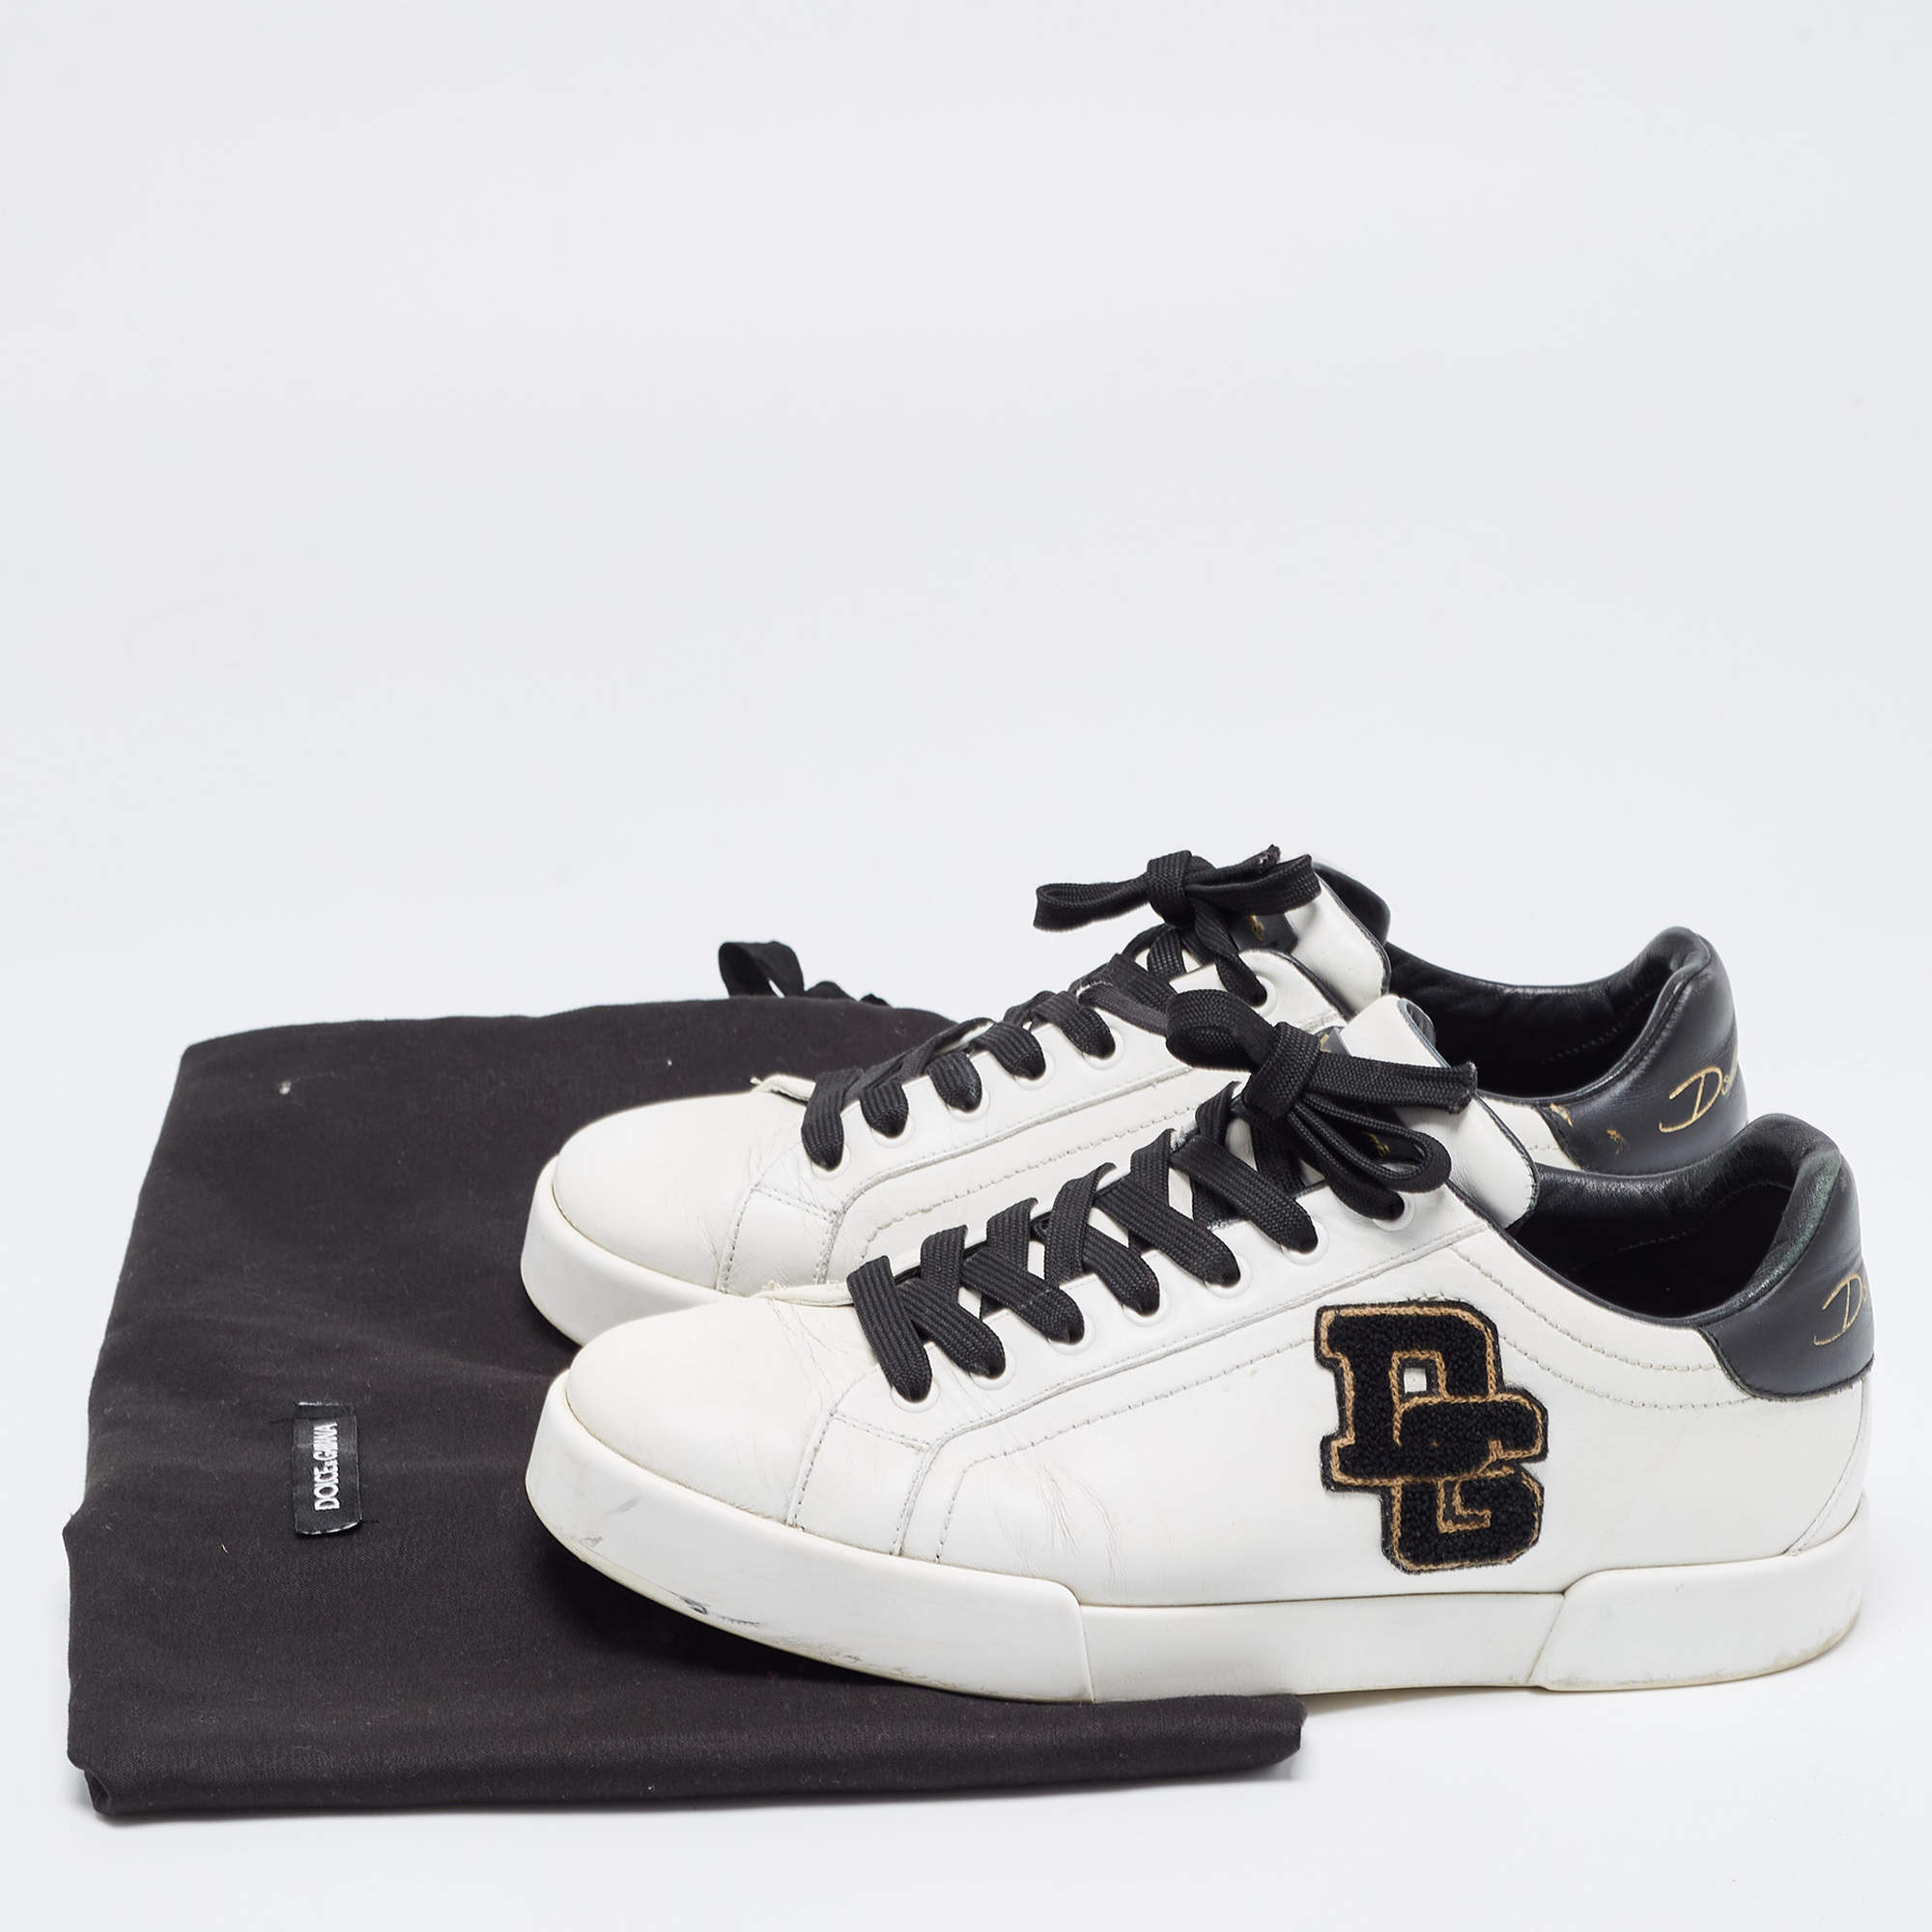 Dolce & Gabbana Dolce & Gabbana White Leather Portofino Lace-Up Sneakers Size 41